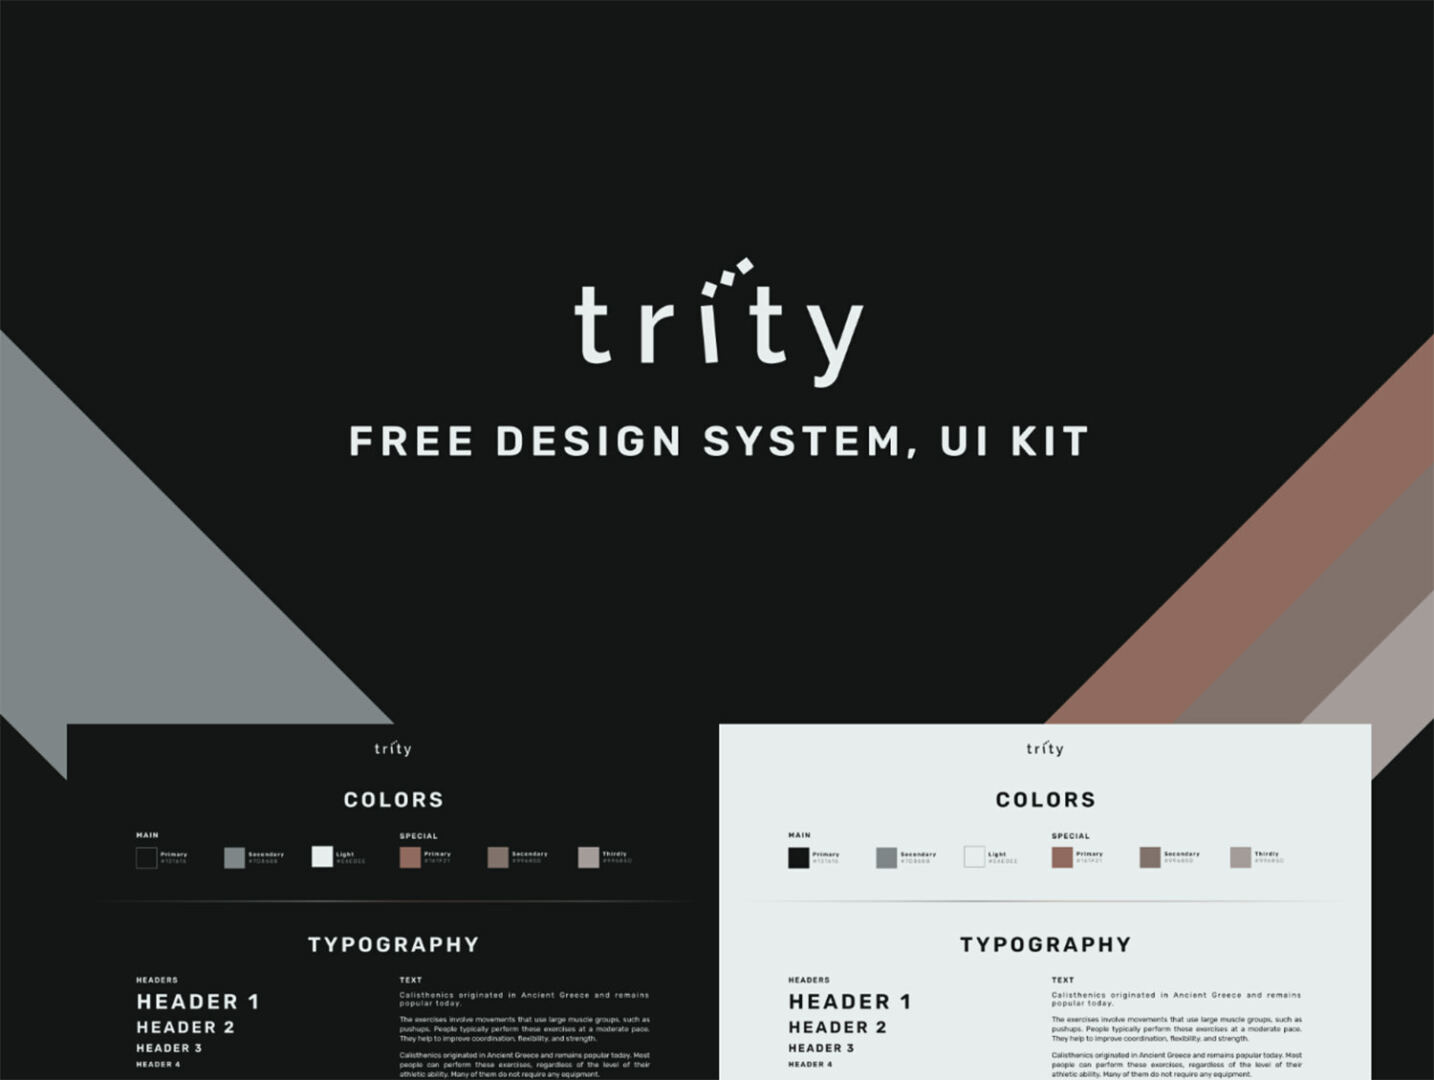 Trity Free Design System